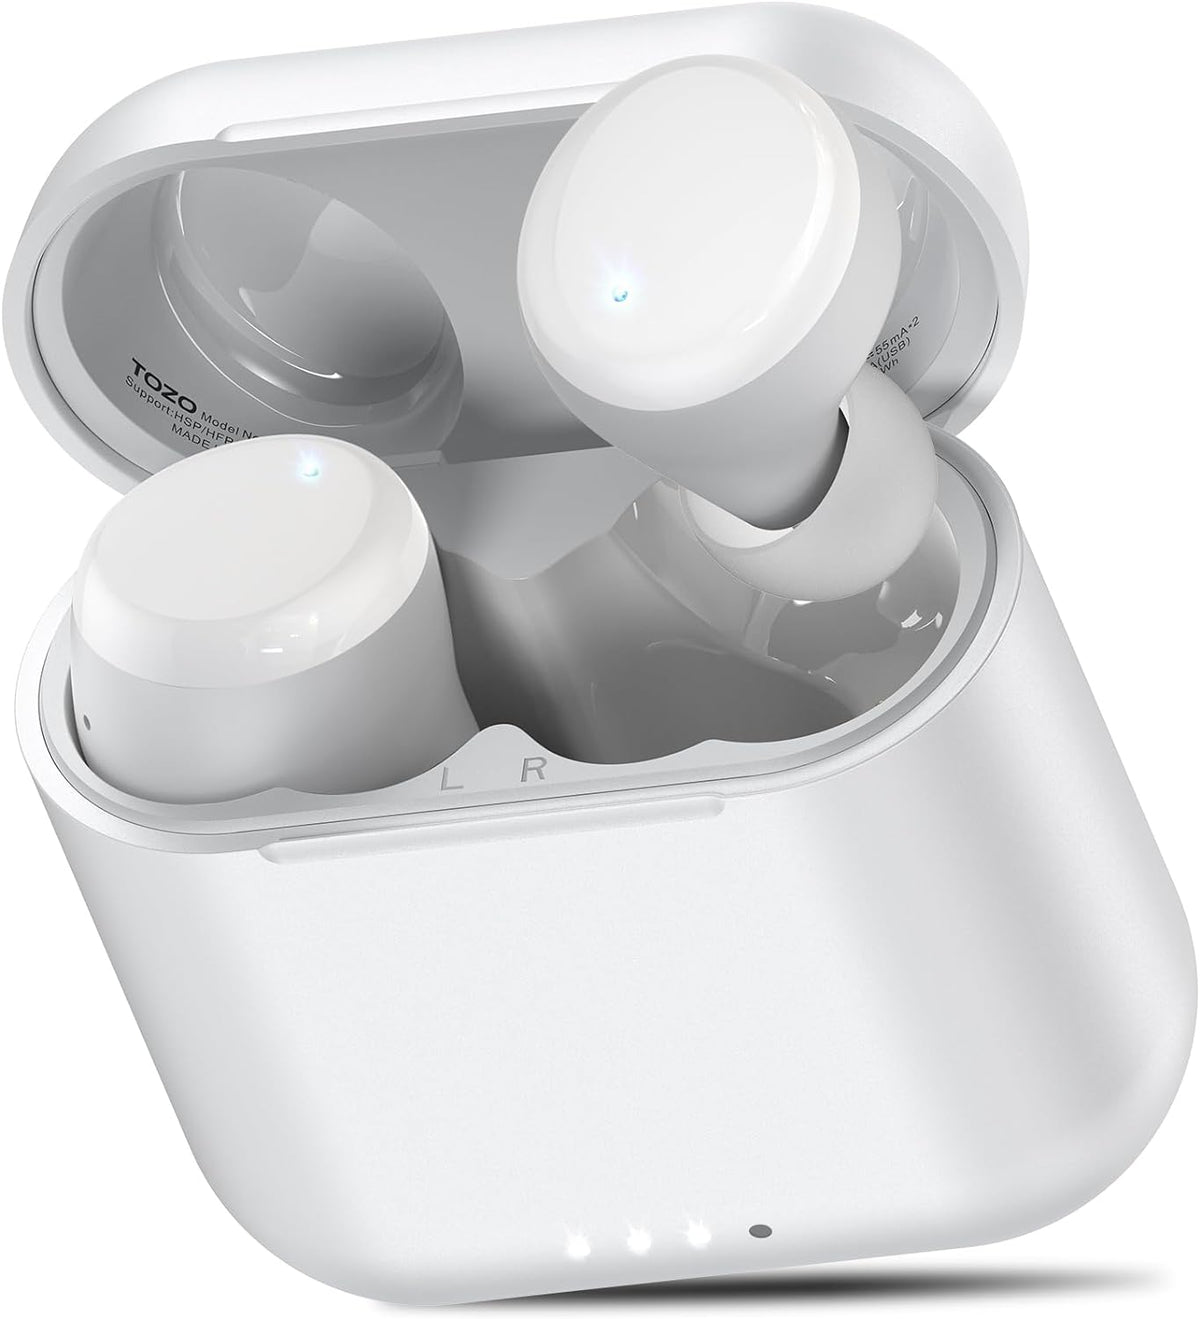 TOZO T6 Wireless Earbuds Bluetooth 5.3 Headphones Deep Bass Waterproof IPX8